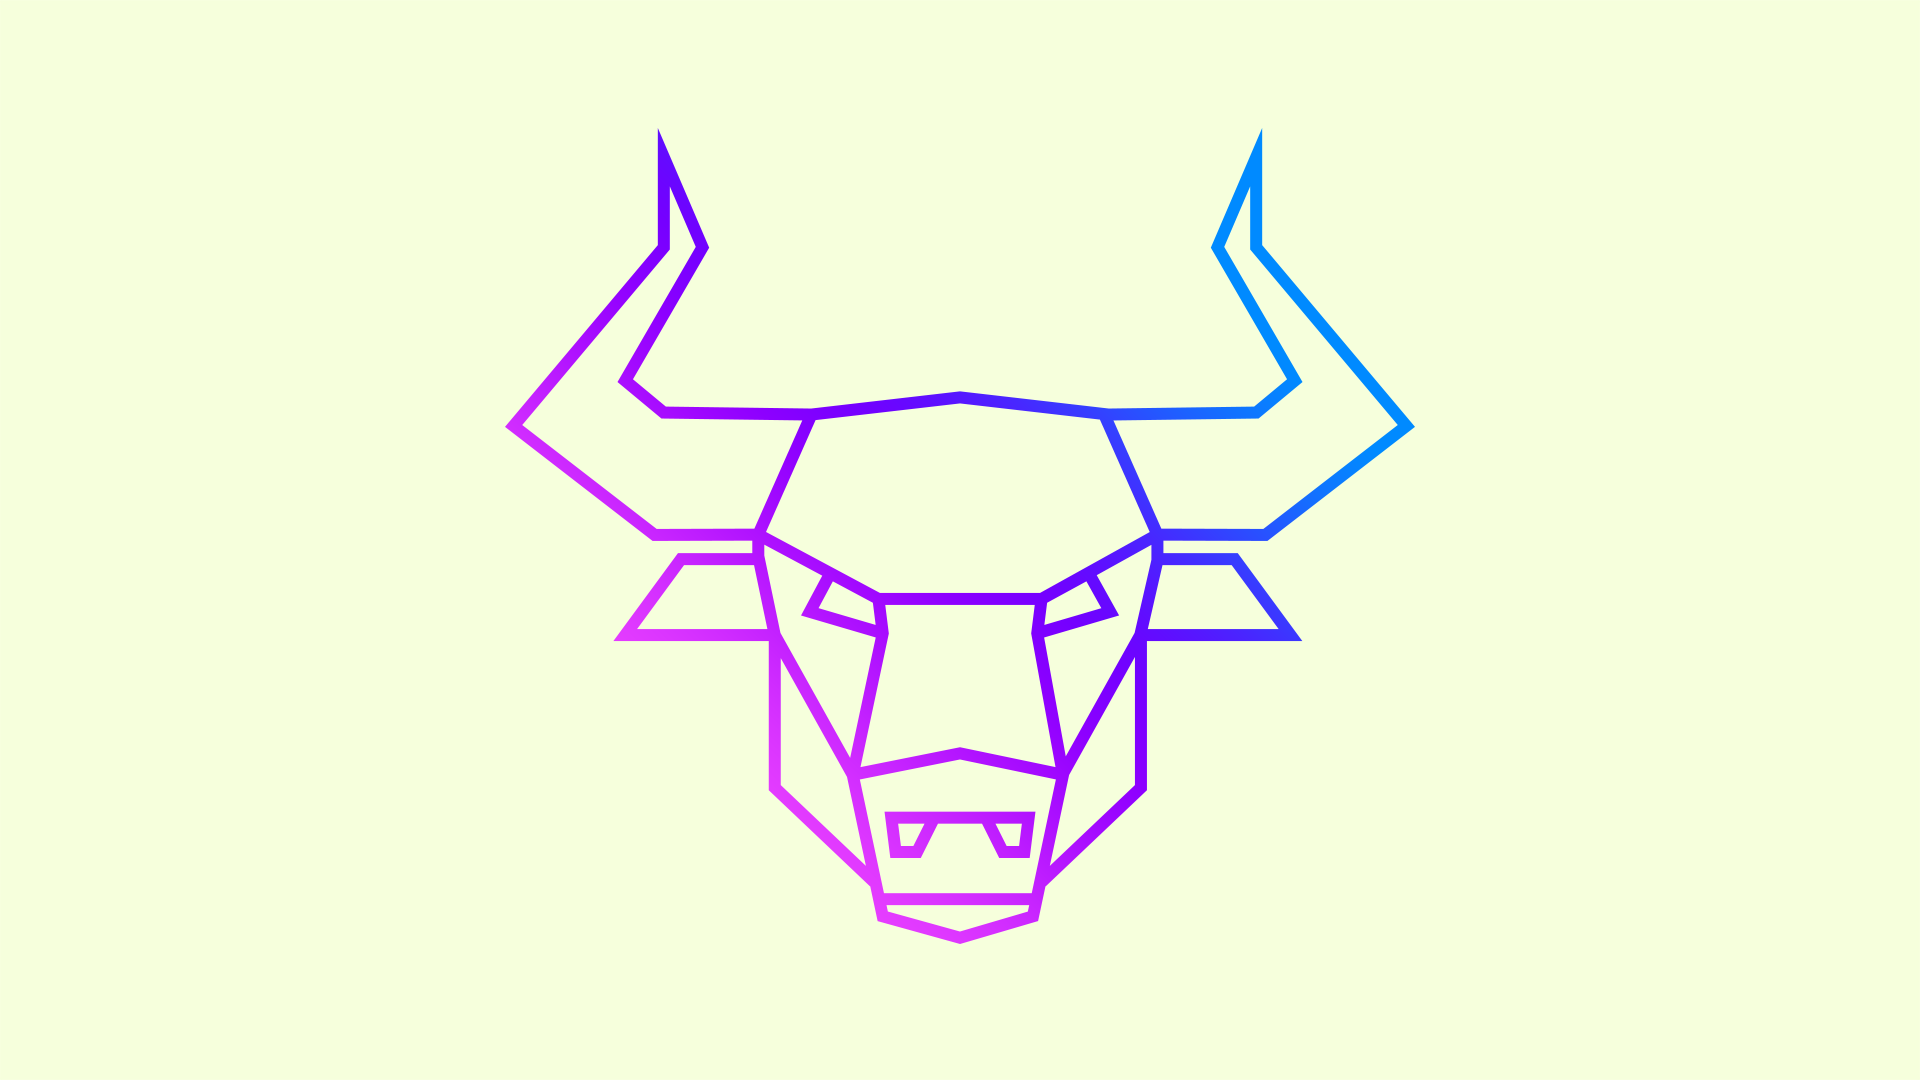 Icon for Taurus B